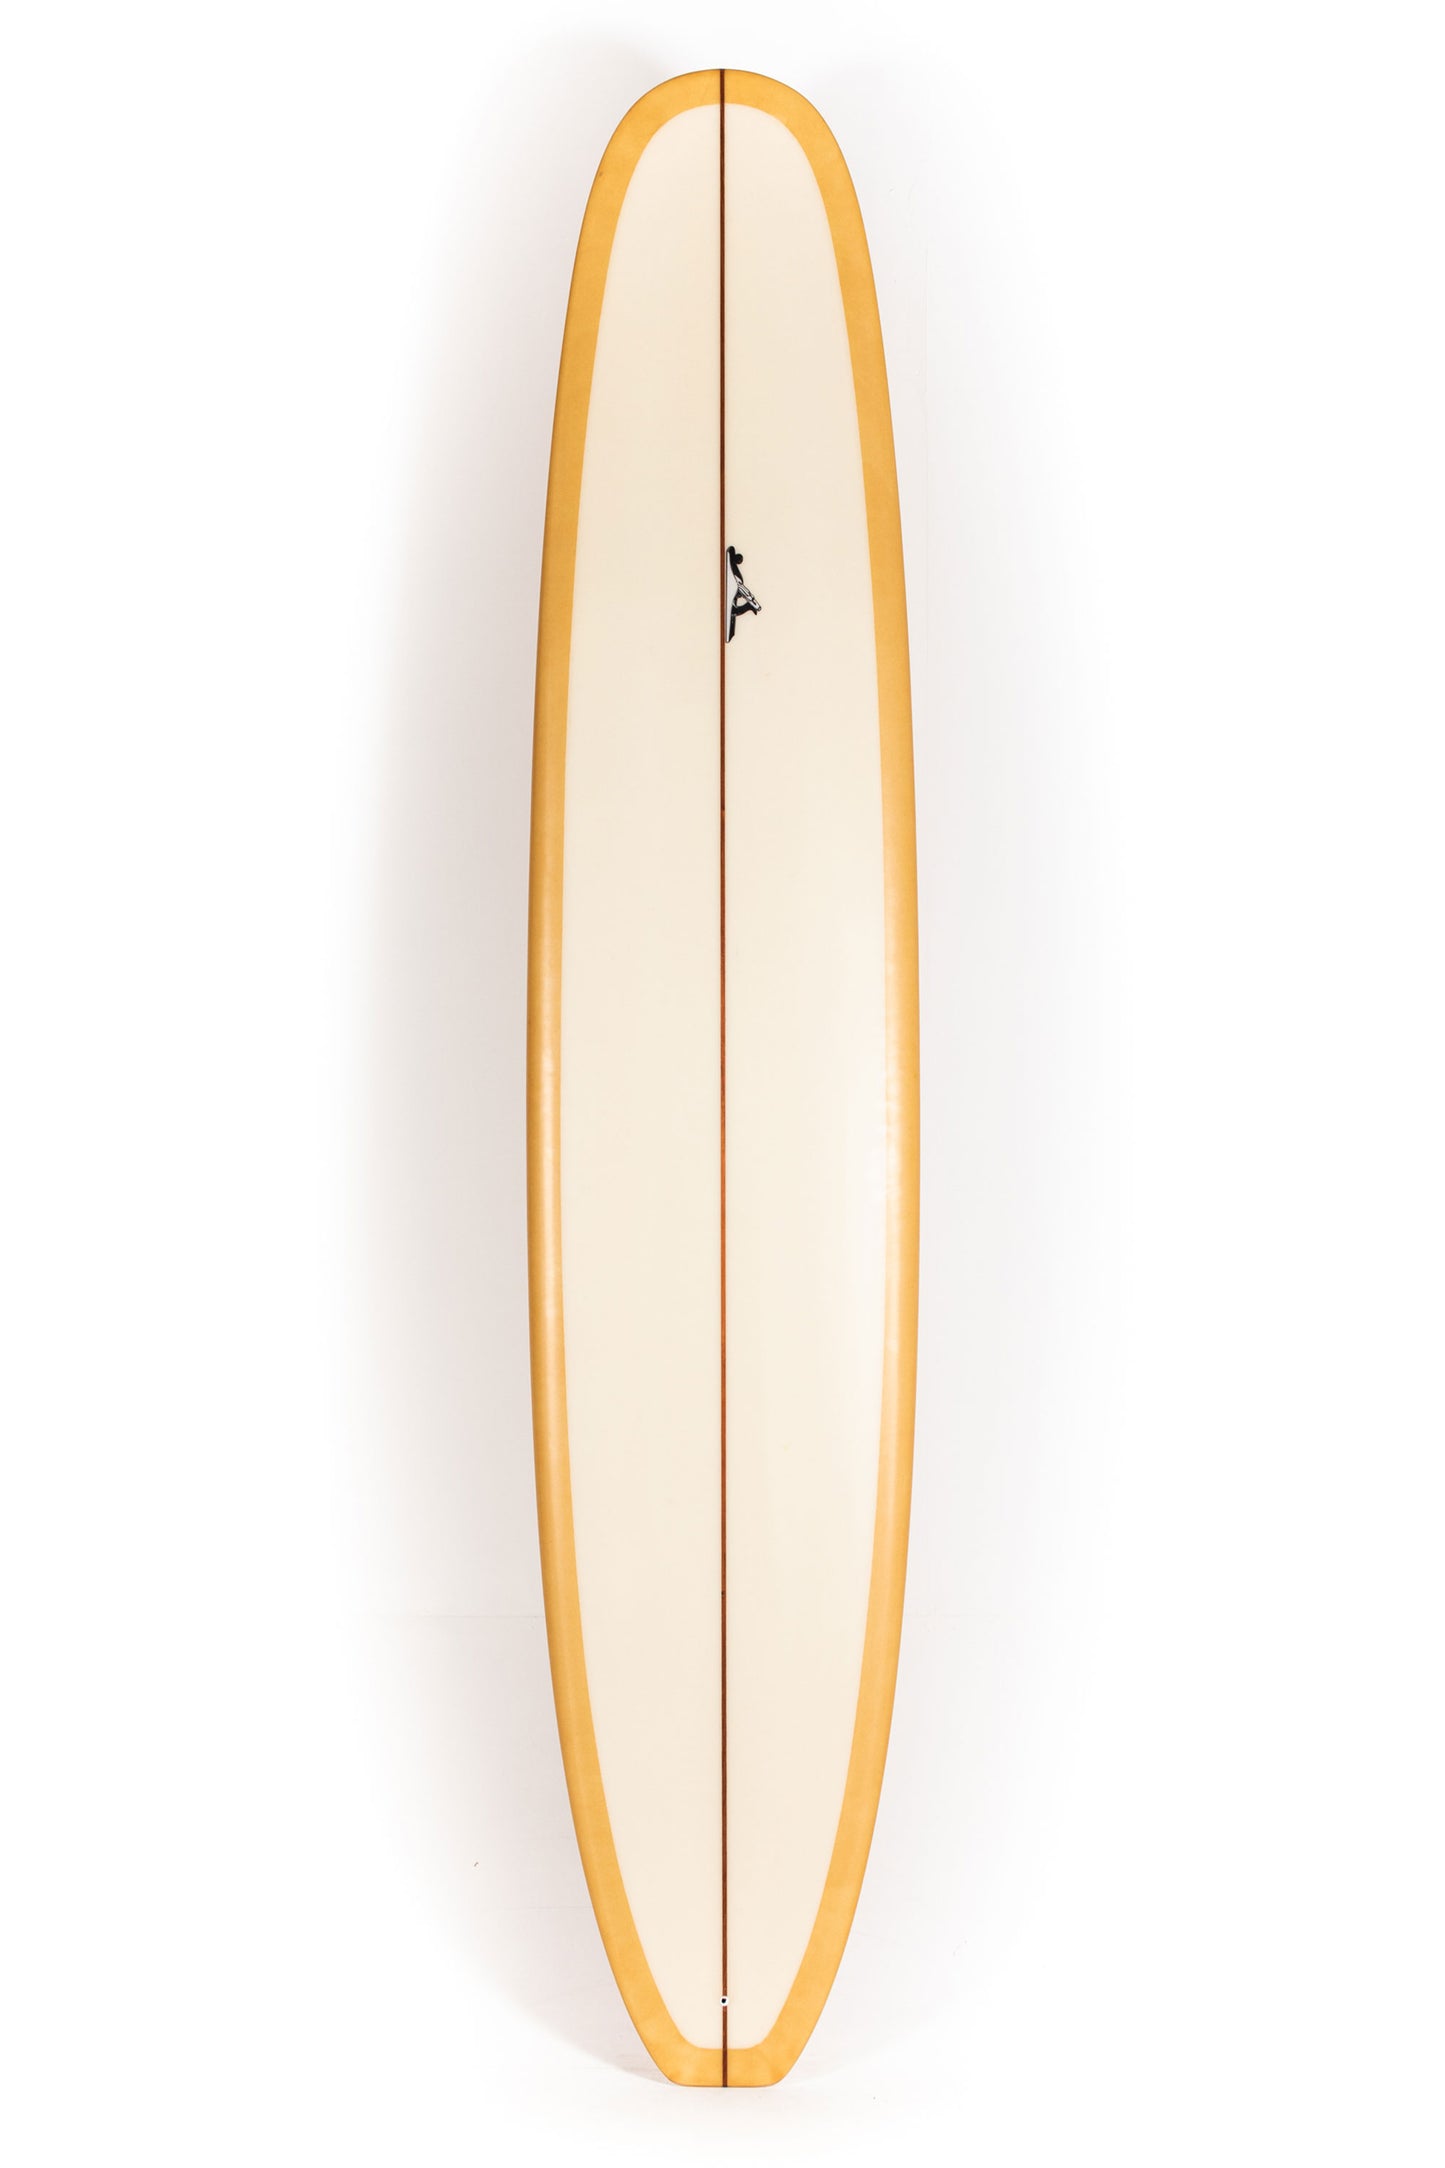 Pukas Surf Shop - Thomas Surfboards - STEP DECK - 9'8"x 23 1/16 x 3 1/16 - STEPDECK98